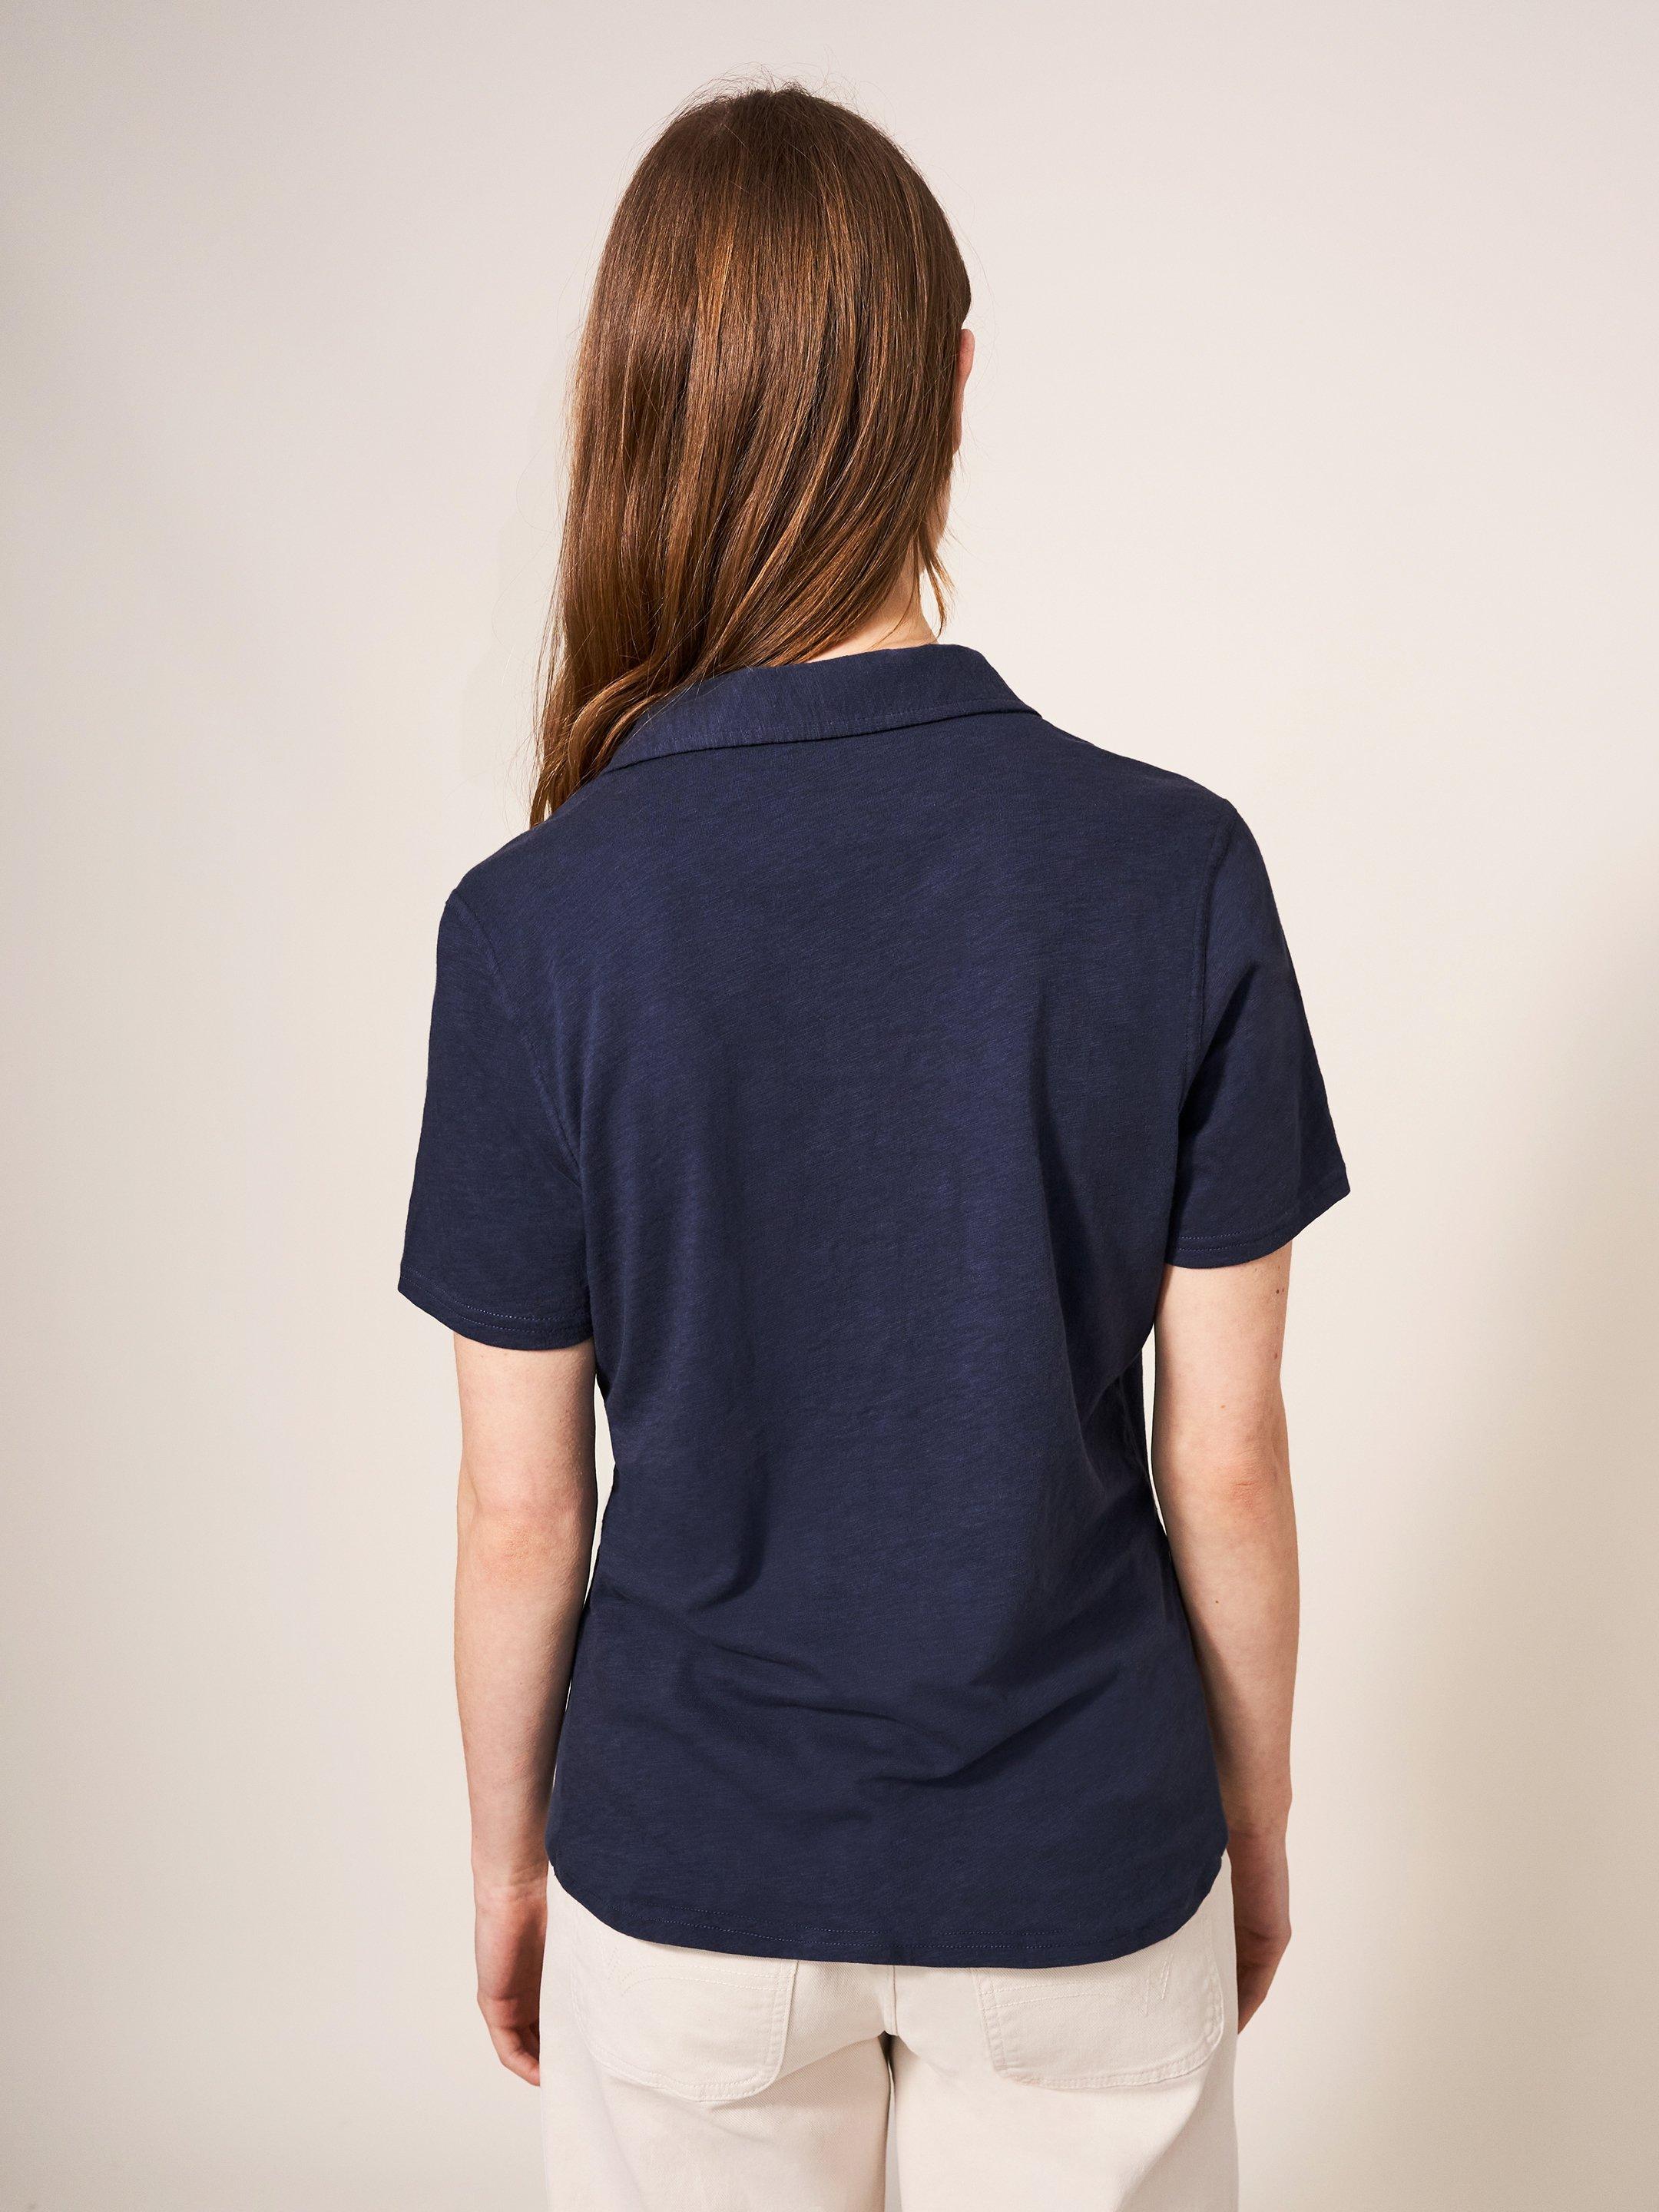 Penny Pocket Jersey Shirt in FR NAVY - MODEL BACK